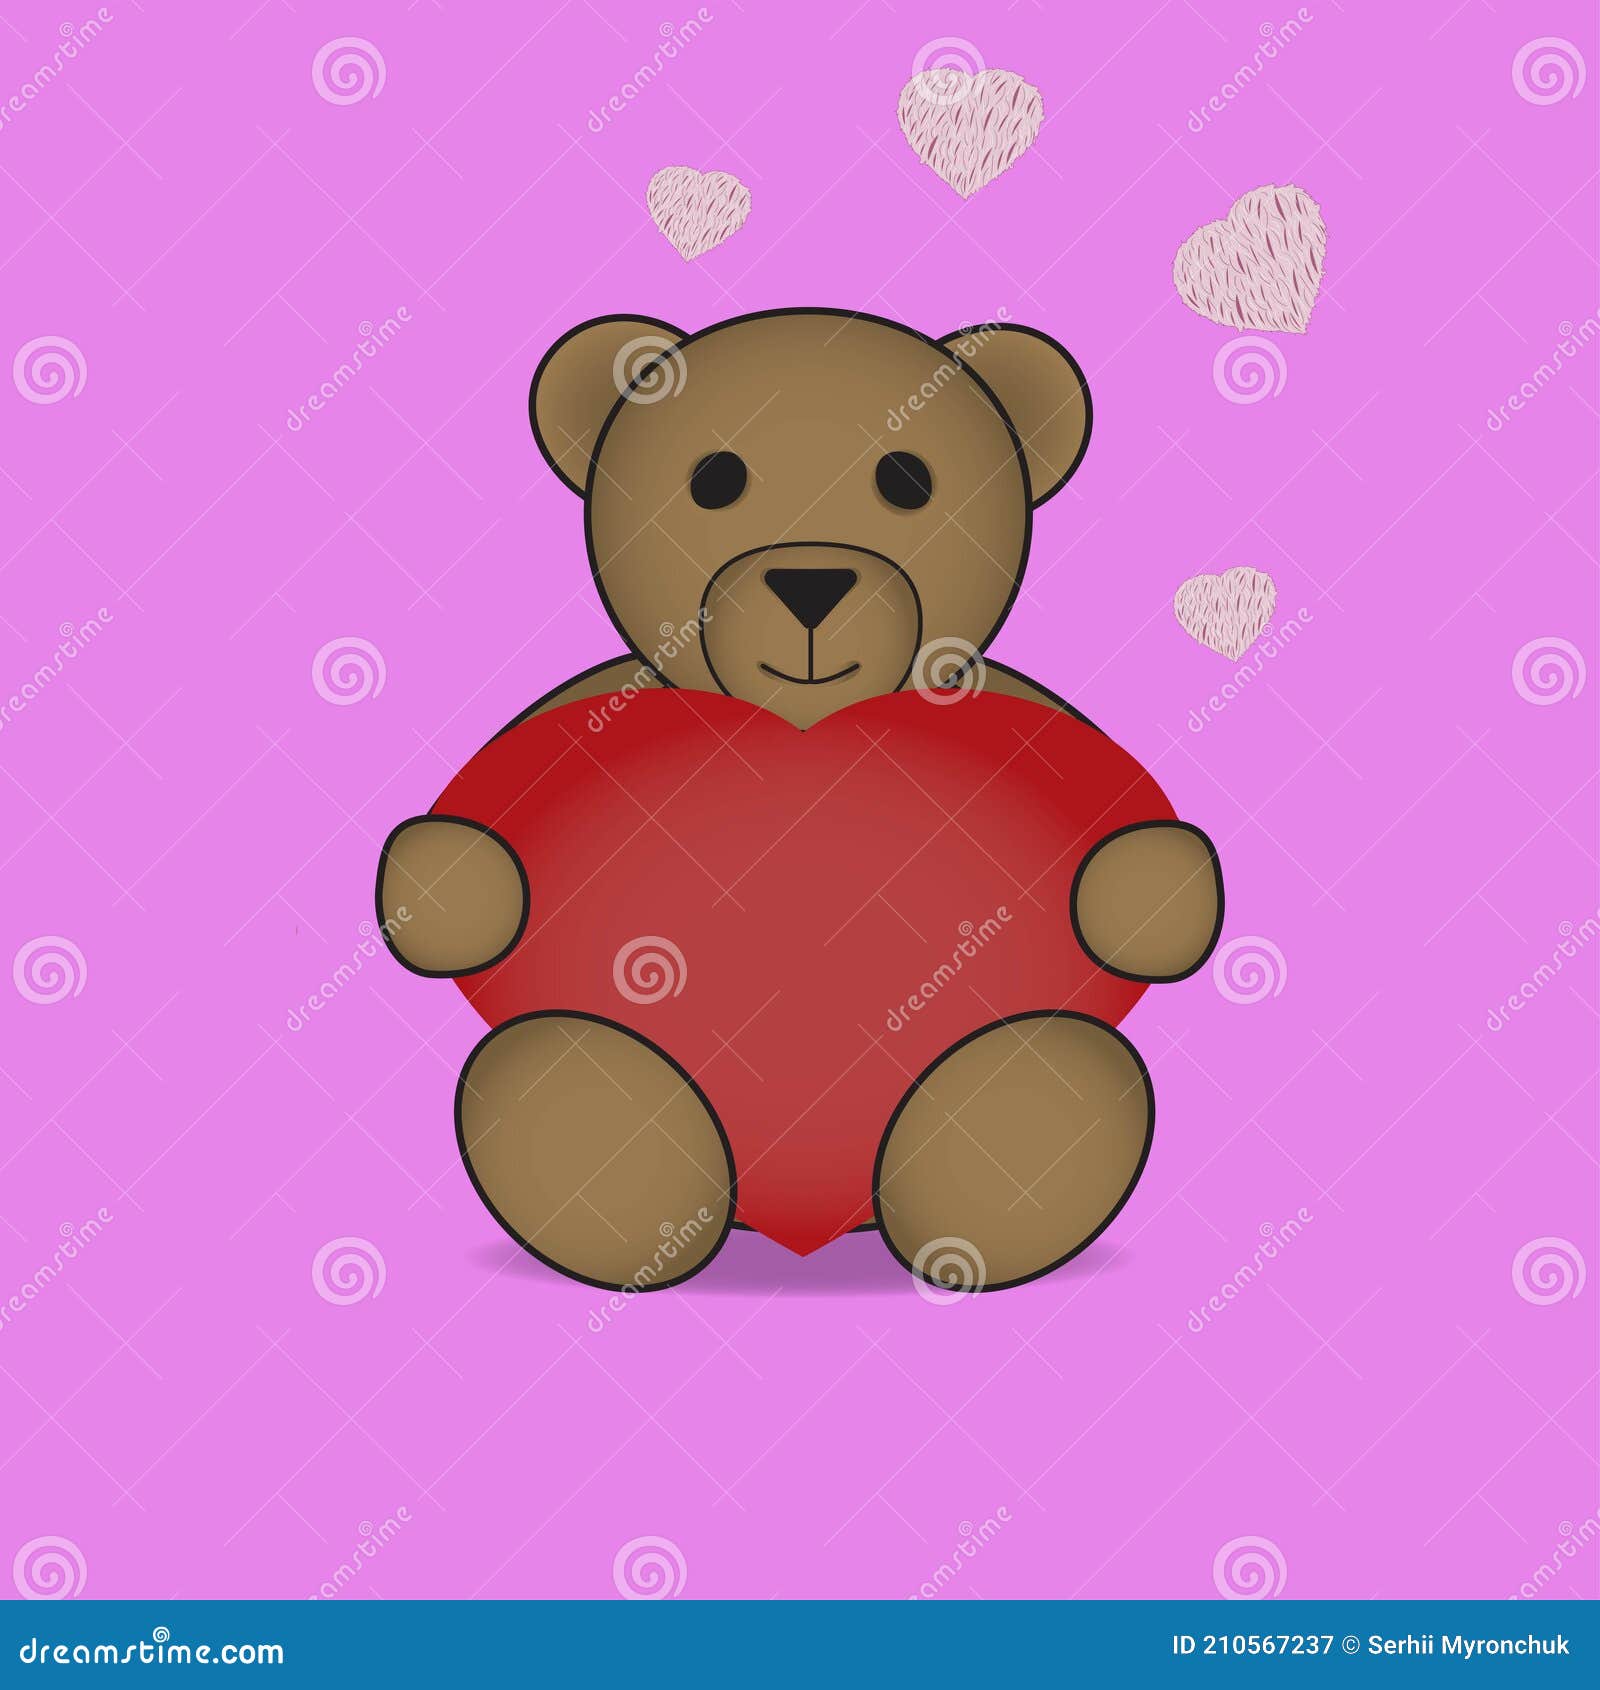 How to draw a cute Teddy Bear / Super Easy! - YouTube